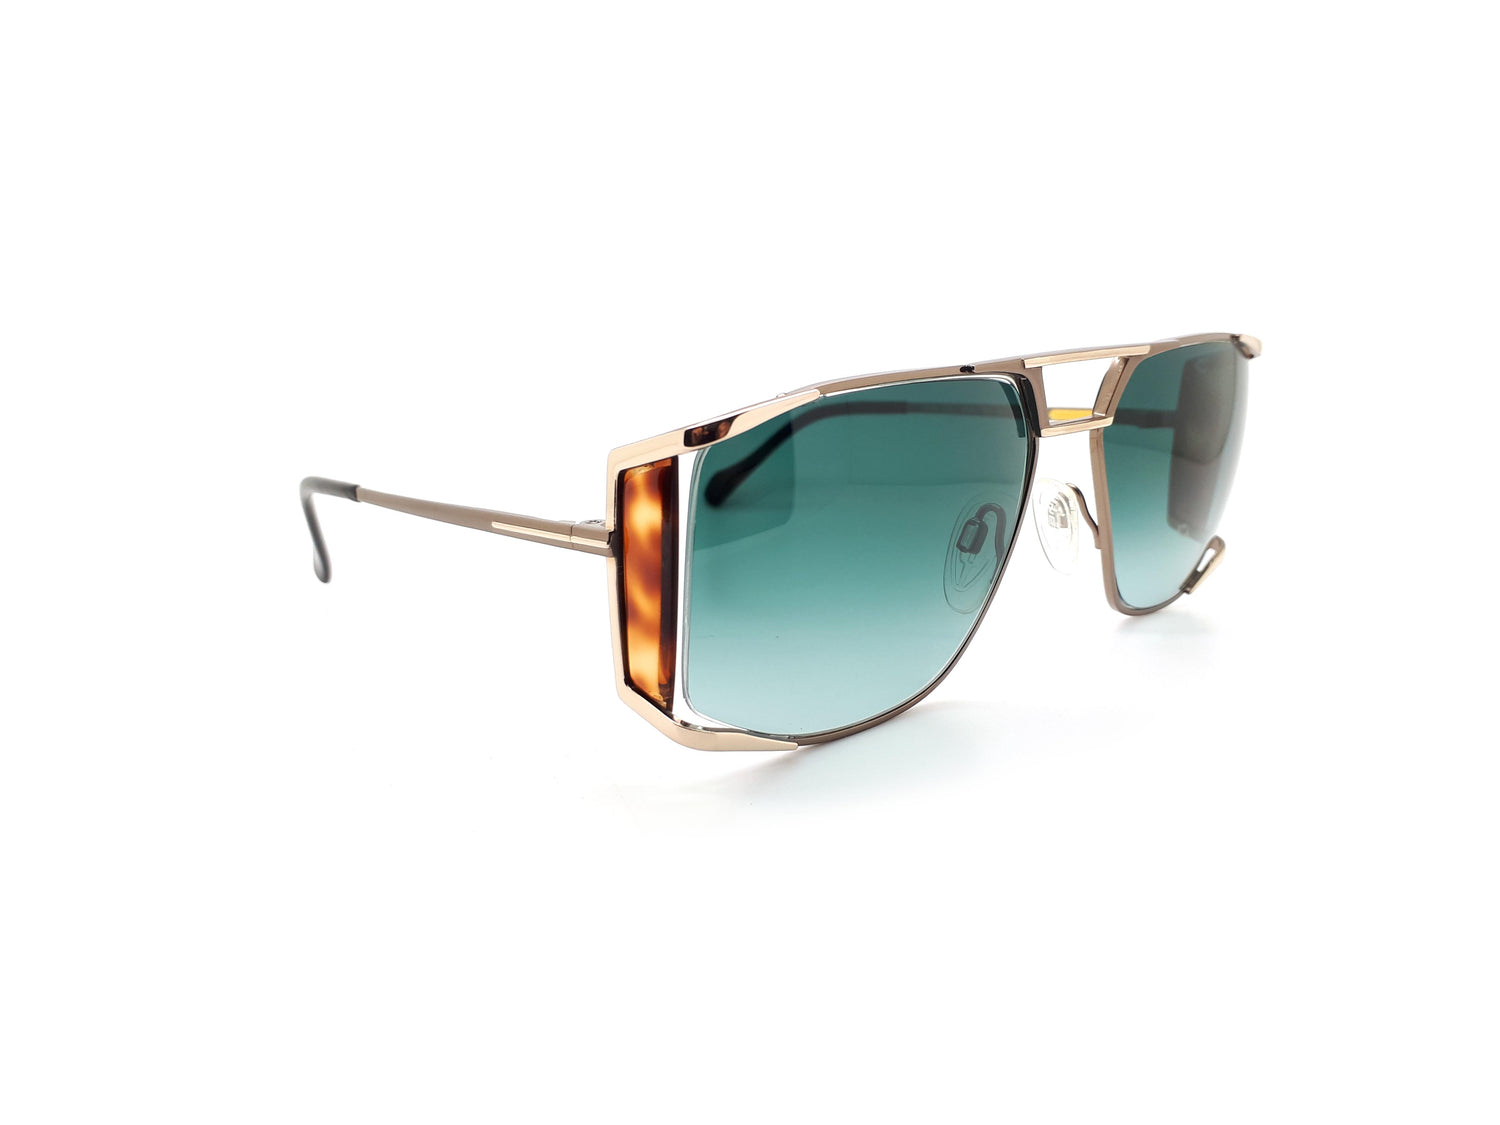 lenshop on X: Saint Laurent Eyewear's sunglasses have been made